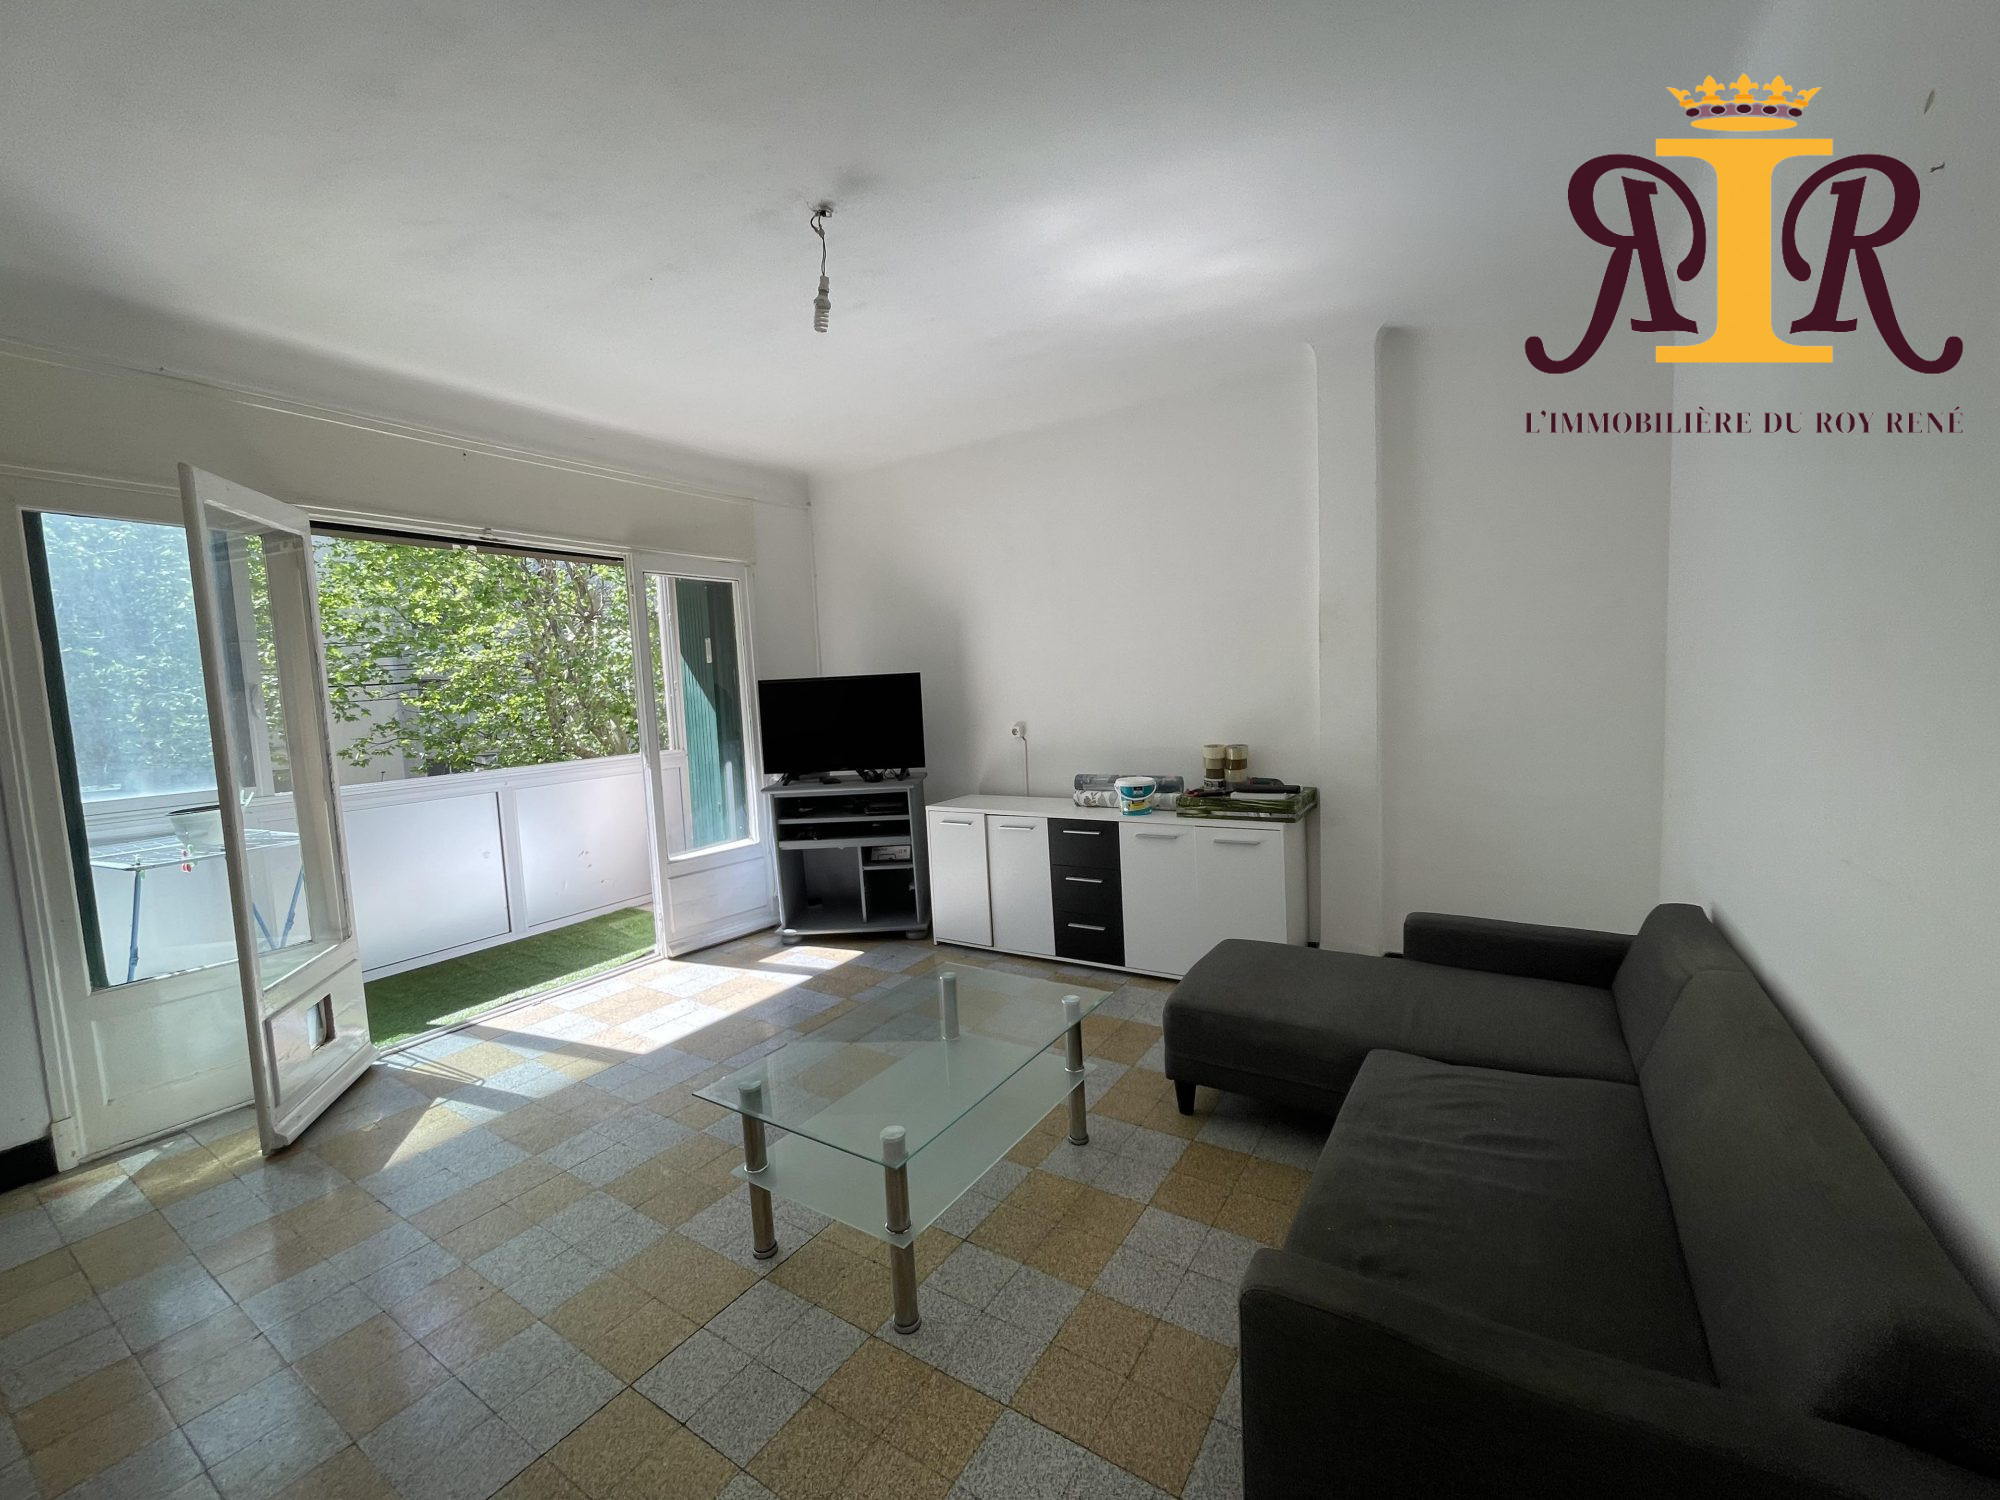 Appartement Vente Arles 3p 78m² 148400€